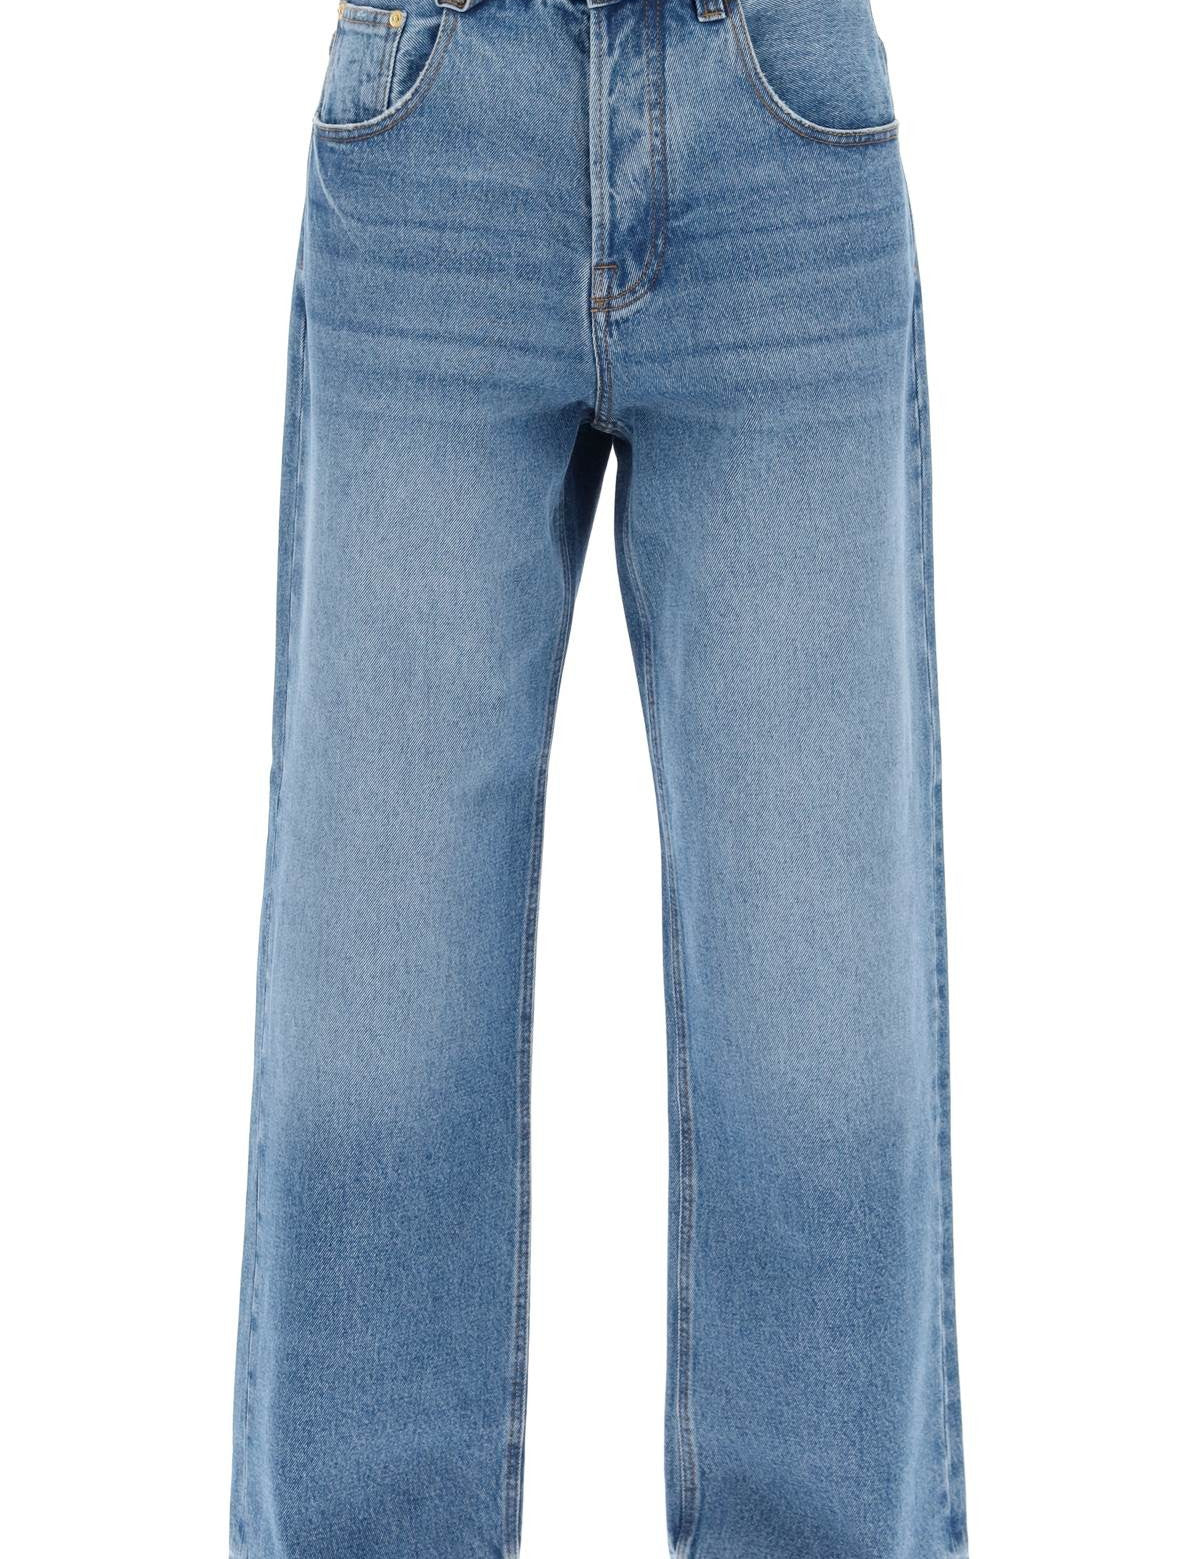 jacquemus-wide-leg-jeans.jpg